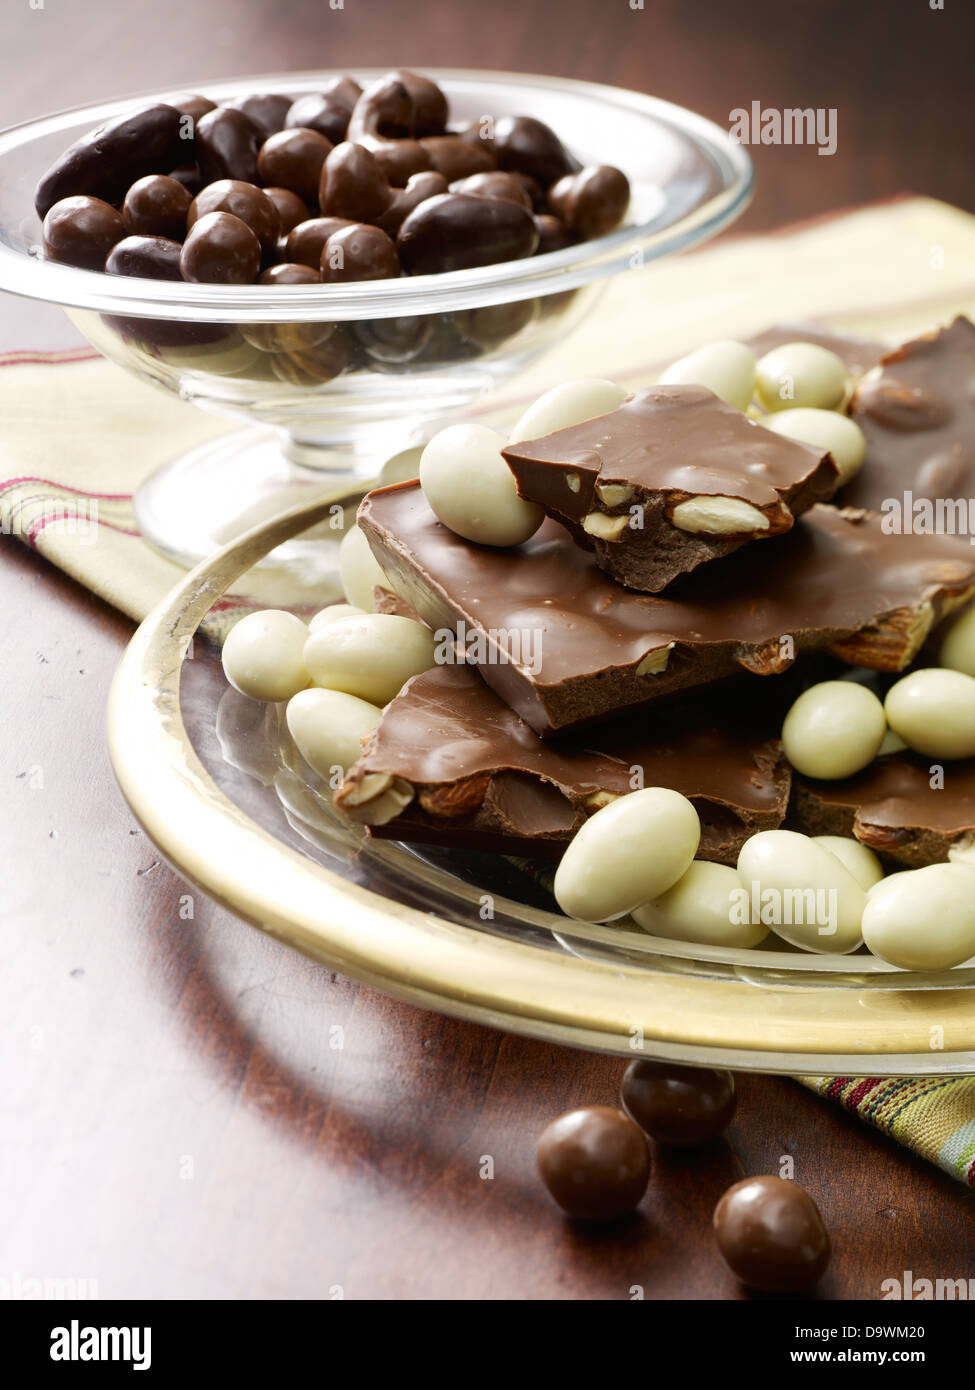 chocolate candy Stock Photo